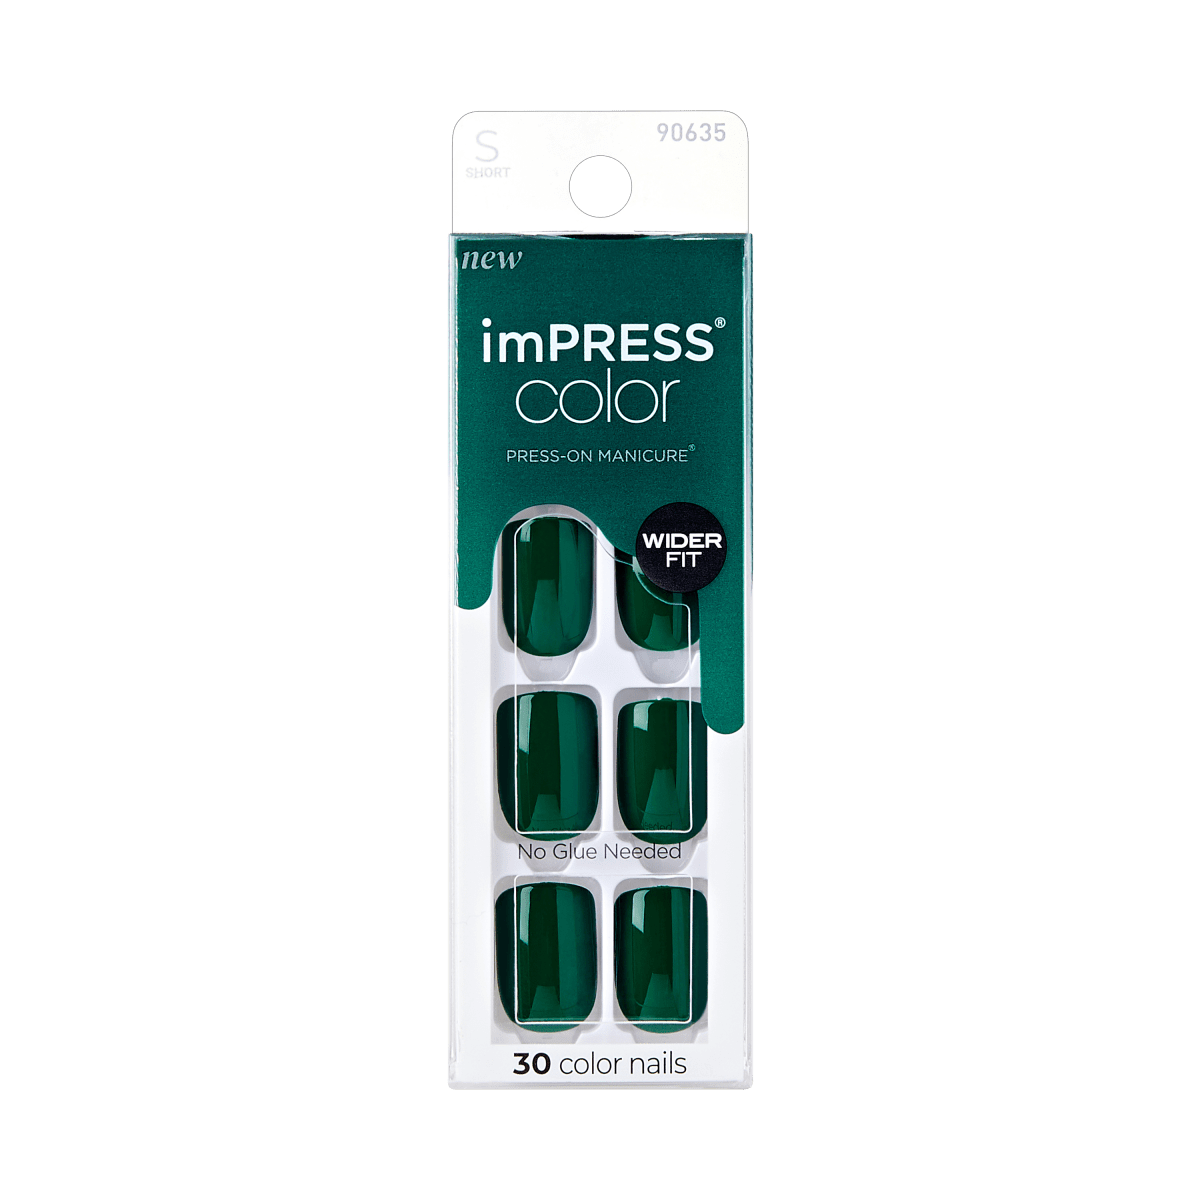 imPRESS Color Press-on Manicure - Realm